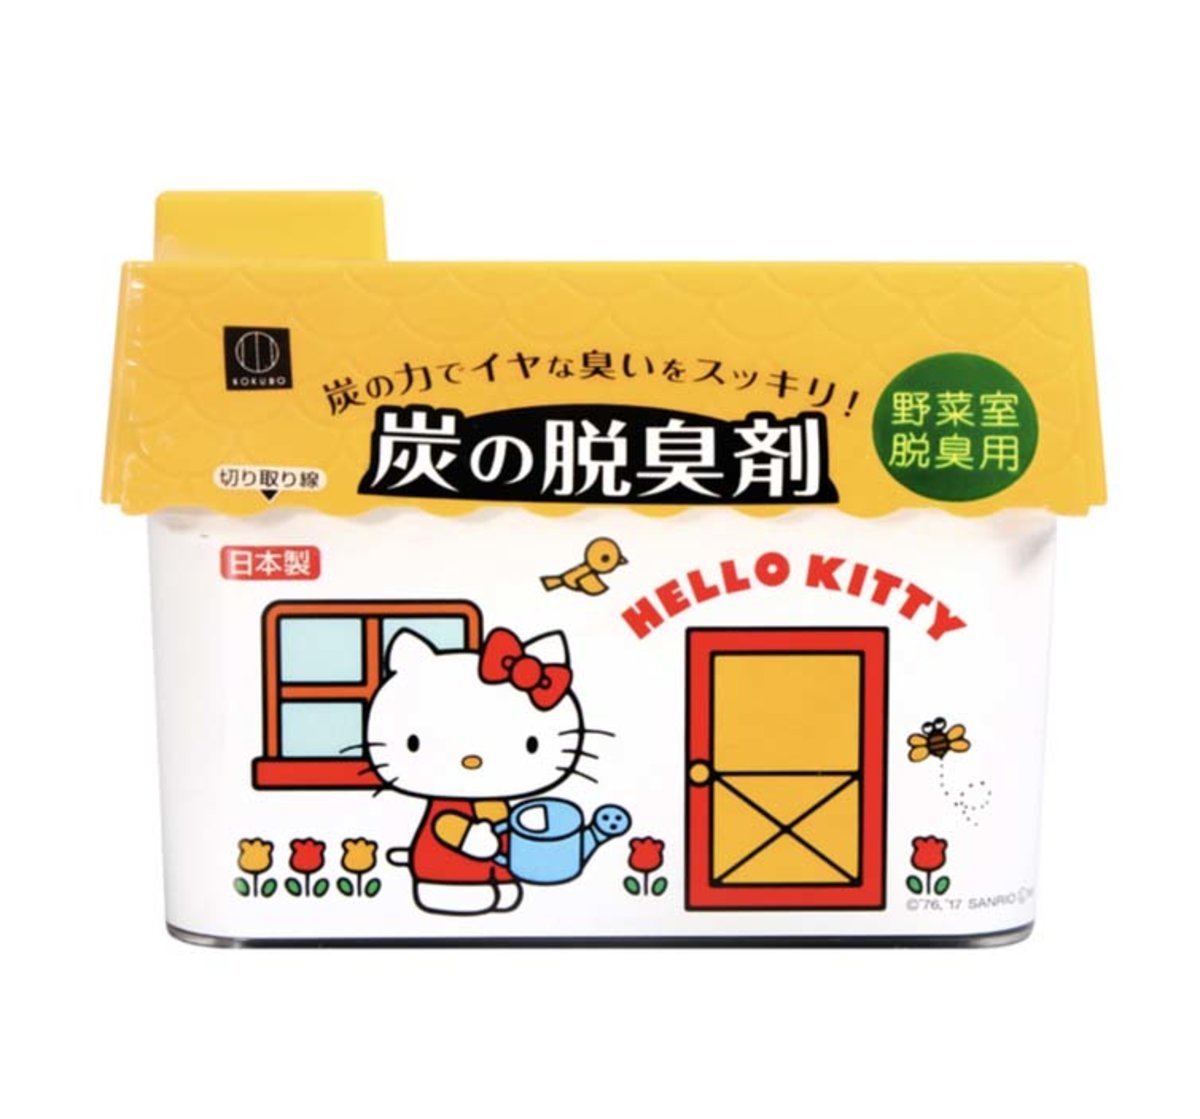 Kokubo Kokubo 日本小久保hello Kitty 冰箱蔬果室備長炭消臭劑 Hktvmall Online Shopping